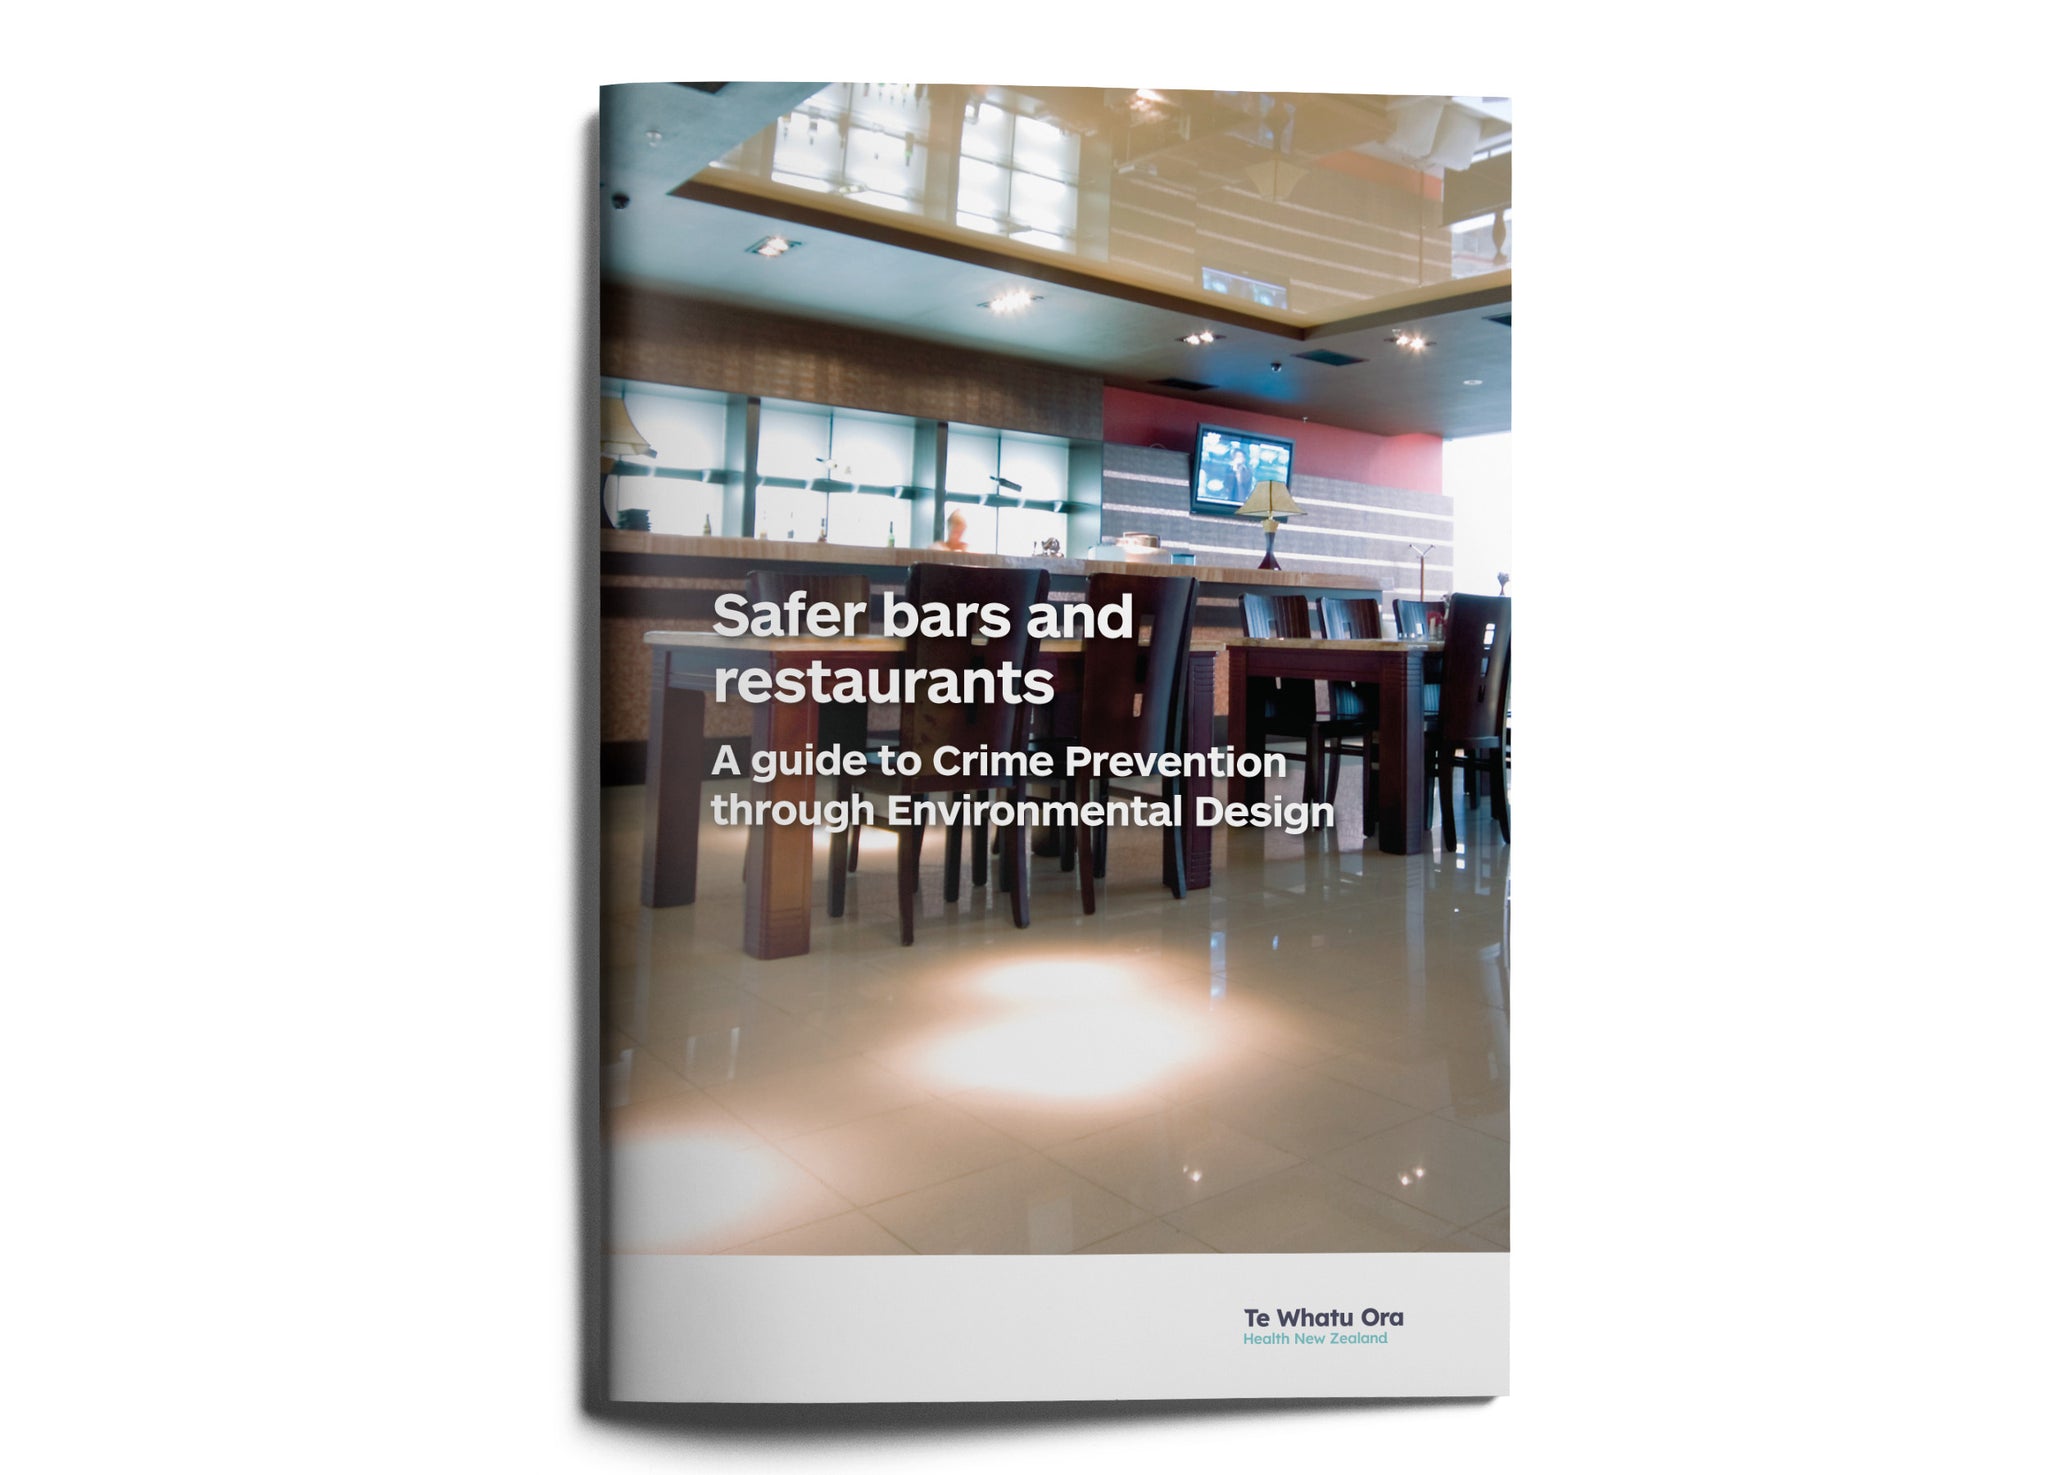 Safer bars and restaurants - A guide to Crime Prevention through Environmental Design